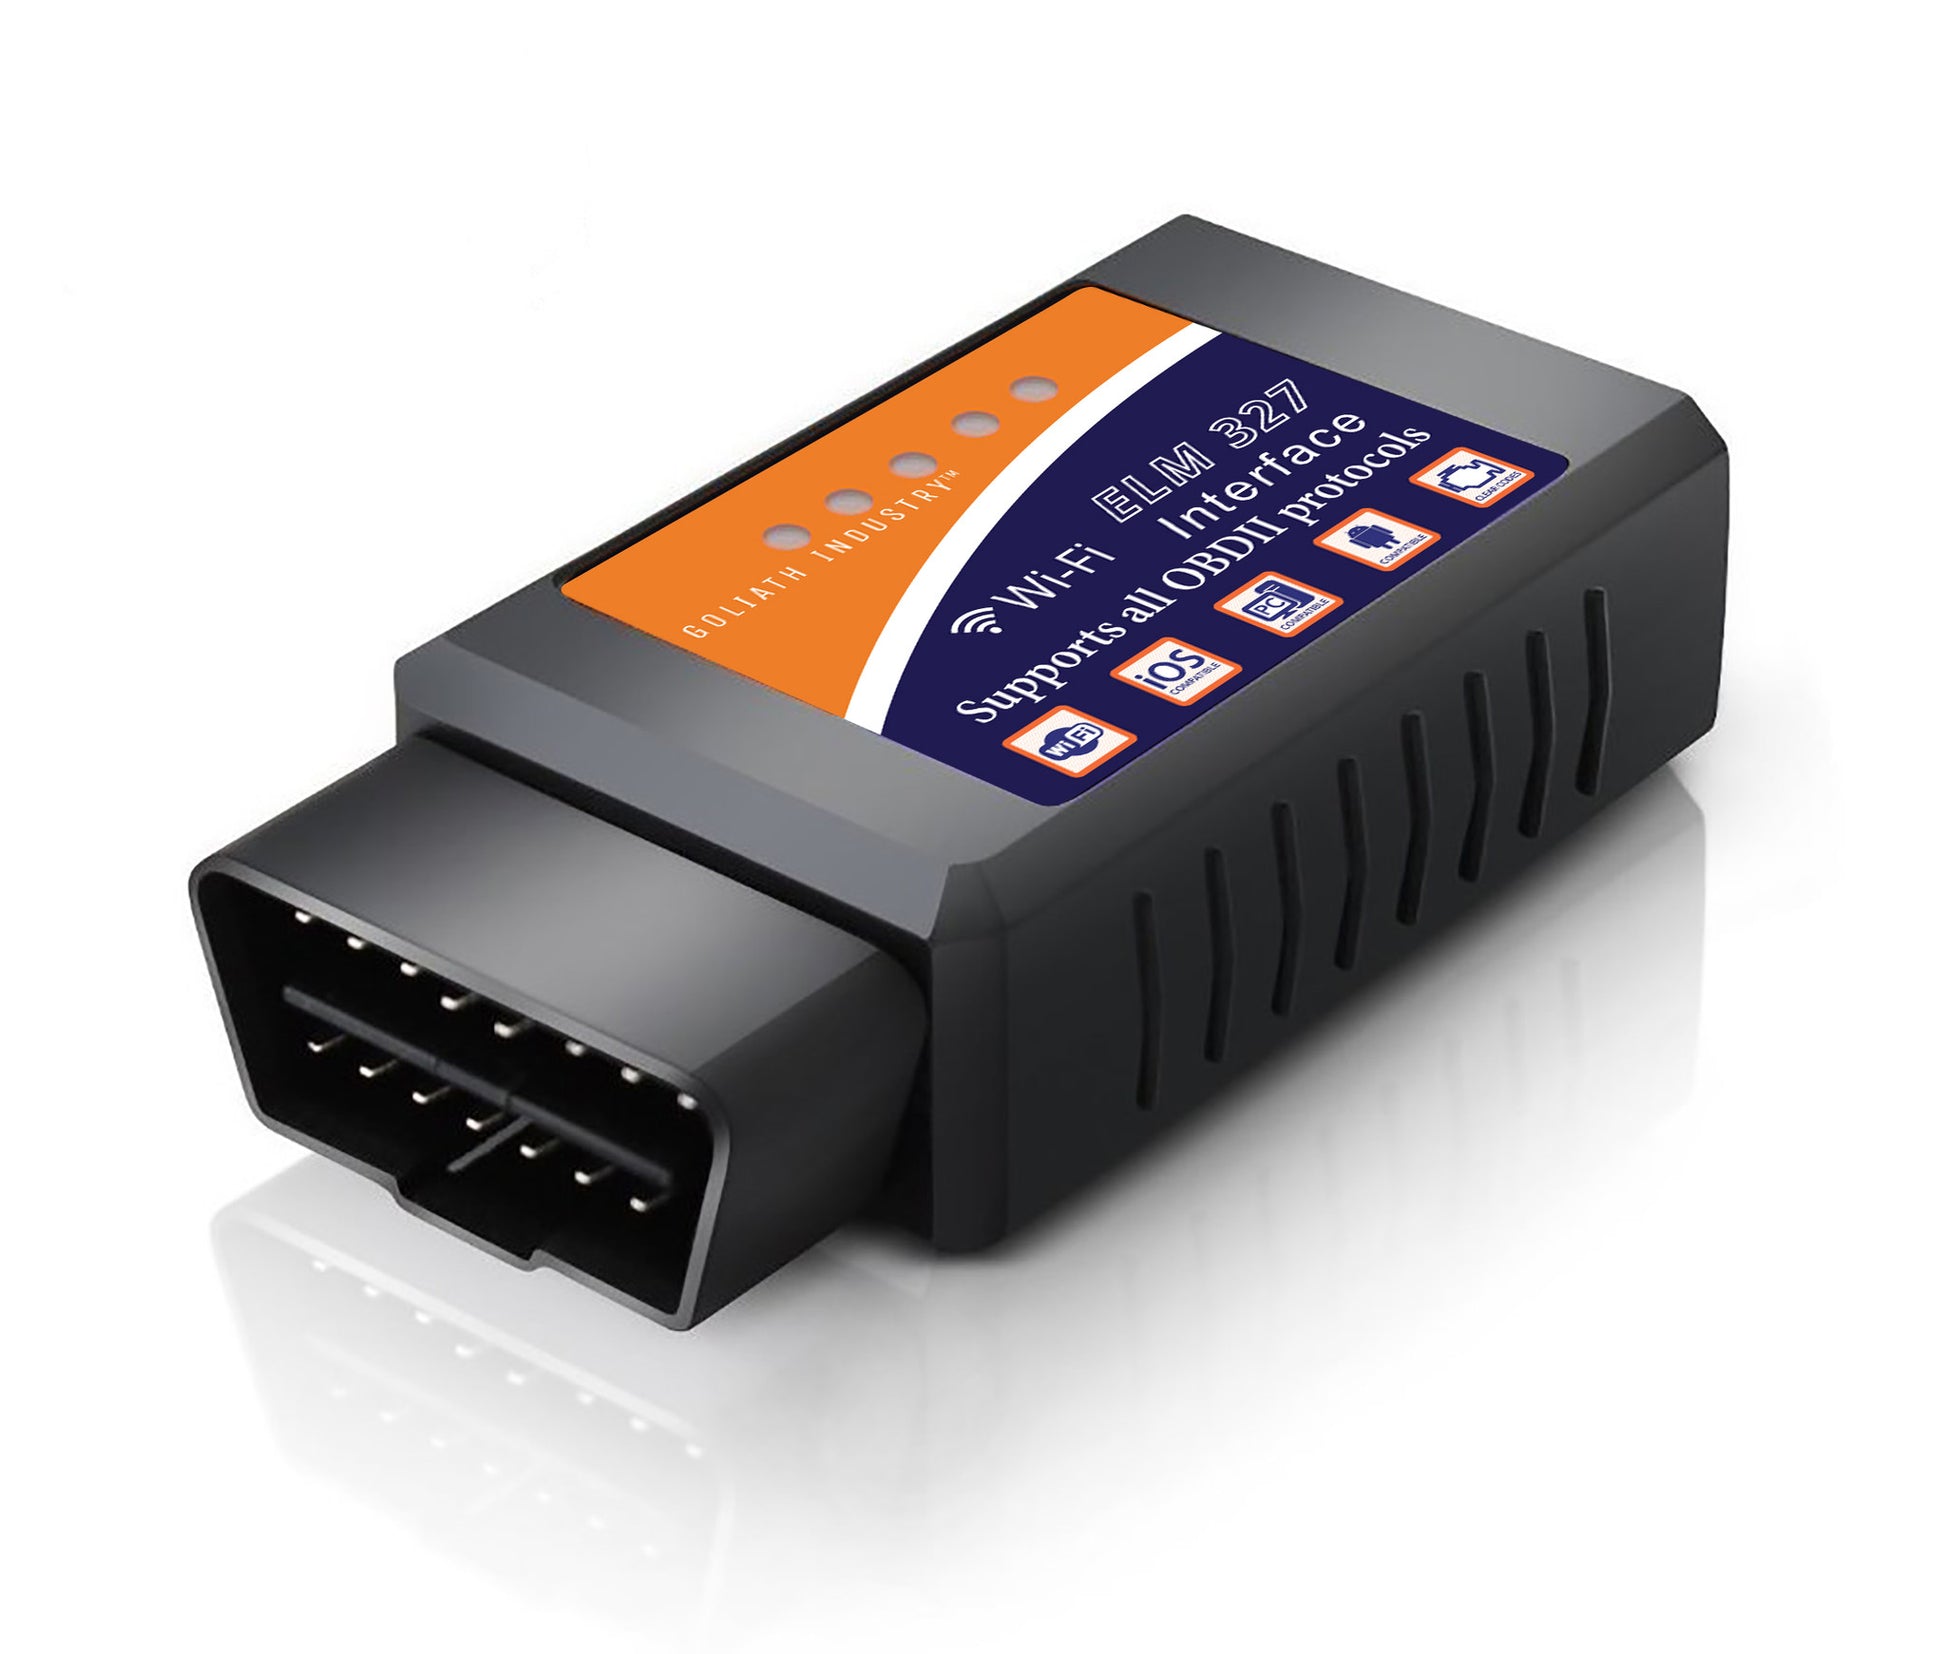 KOBRA Wireless OBD2 Car Code Reader Scan Tool OBD Scanner Connects Via –  kobraproducts